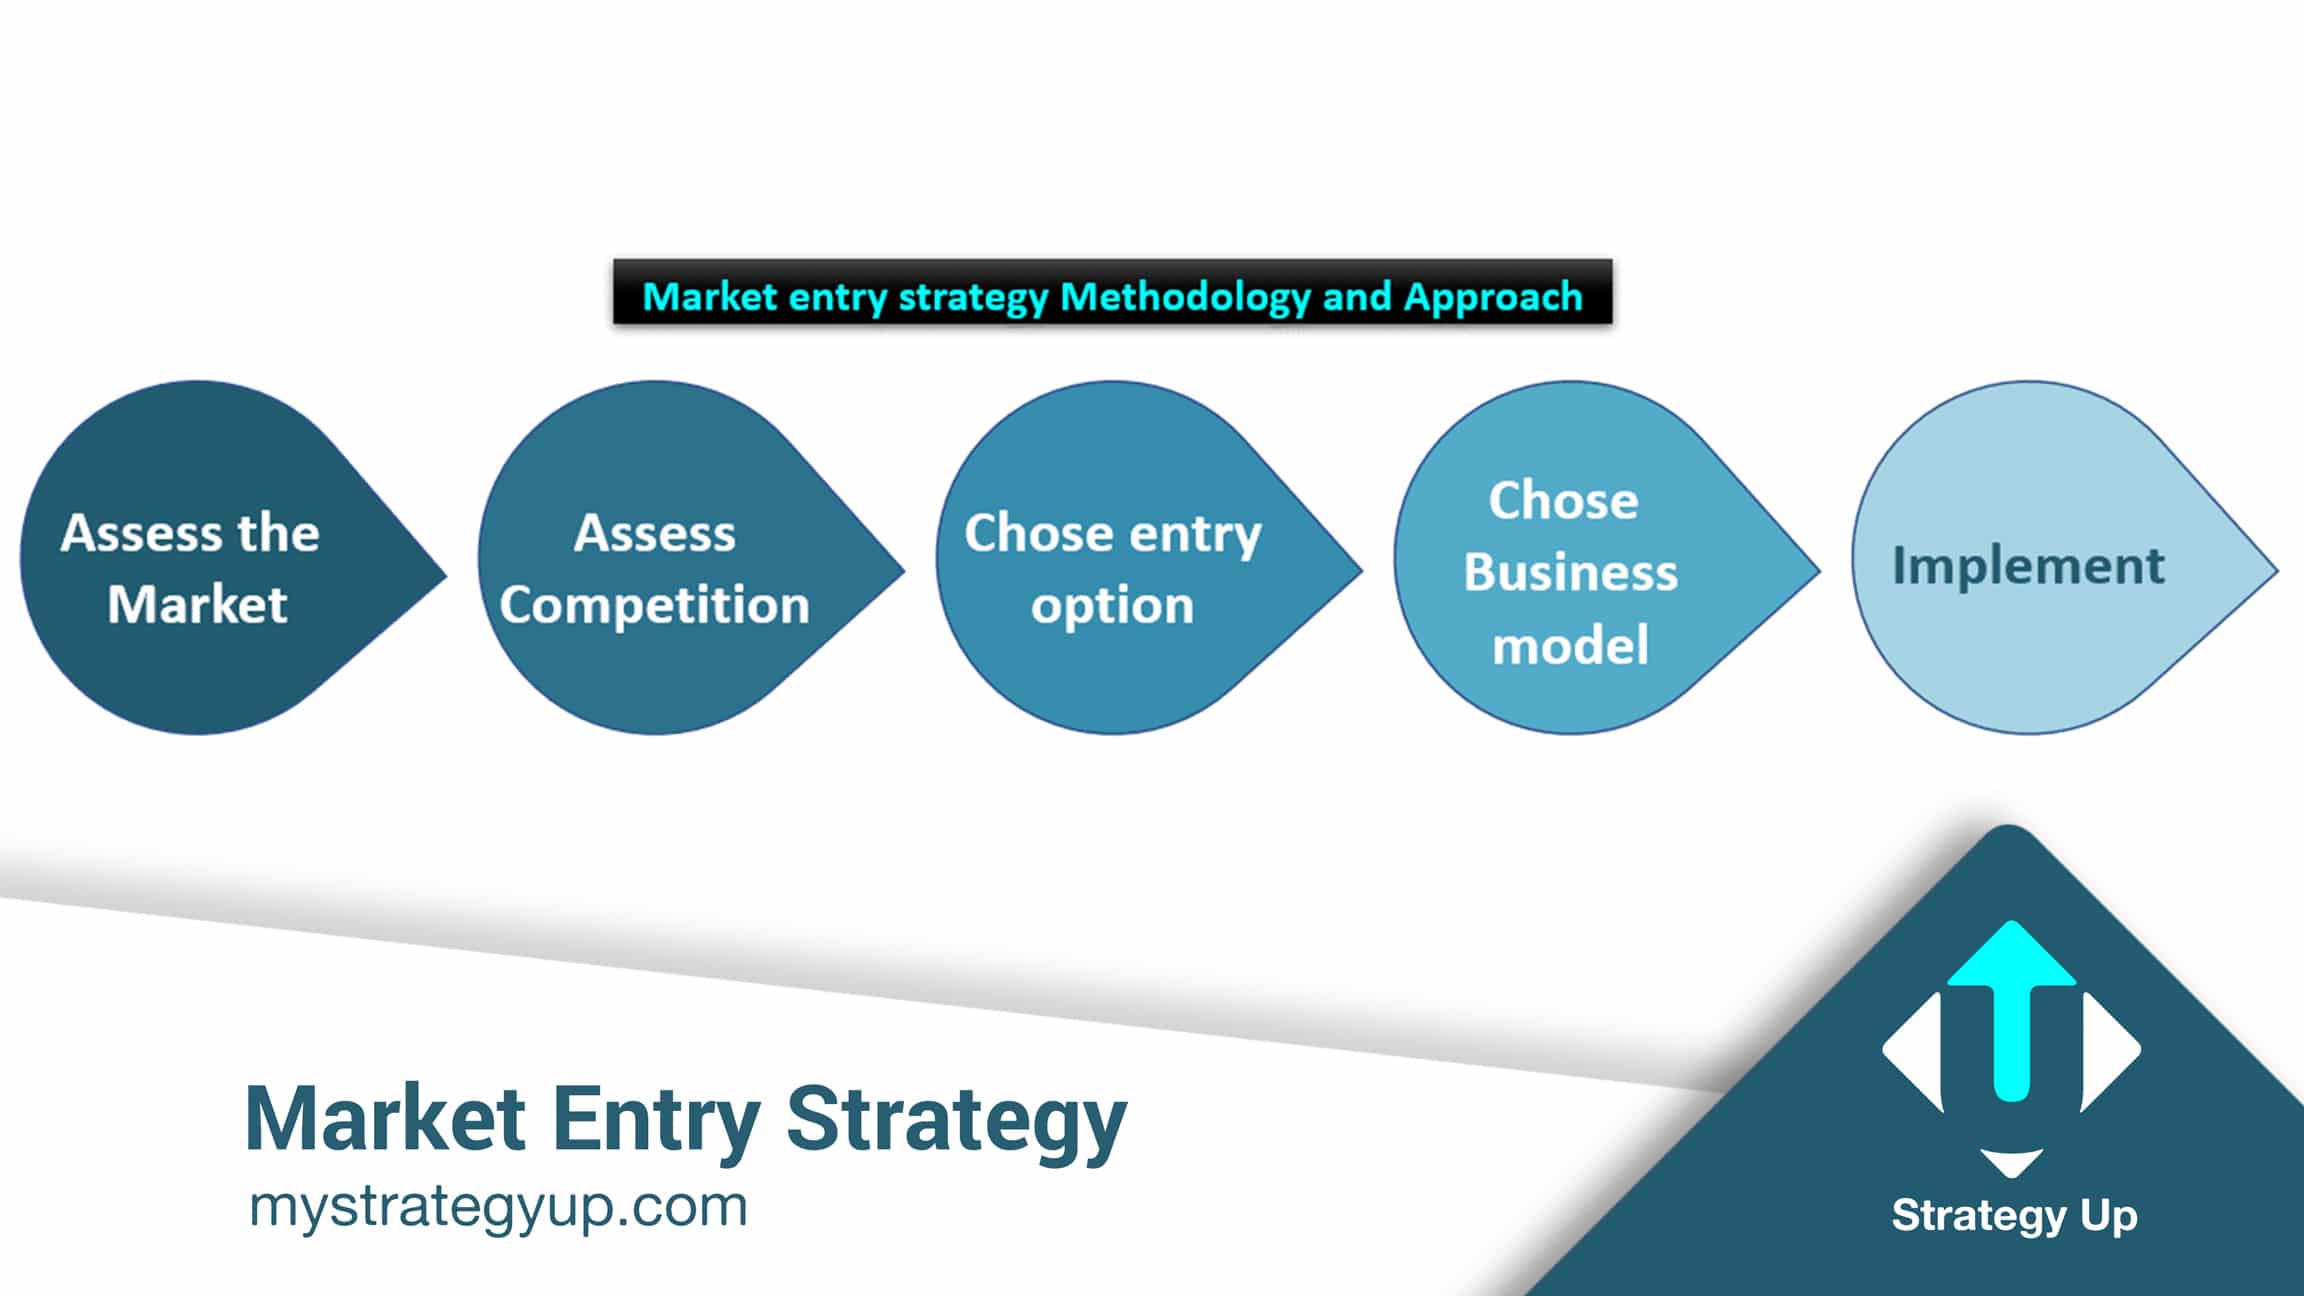 Market entry strategy methodology